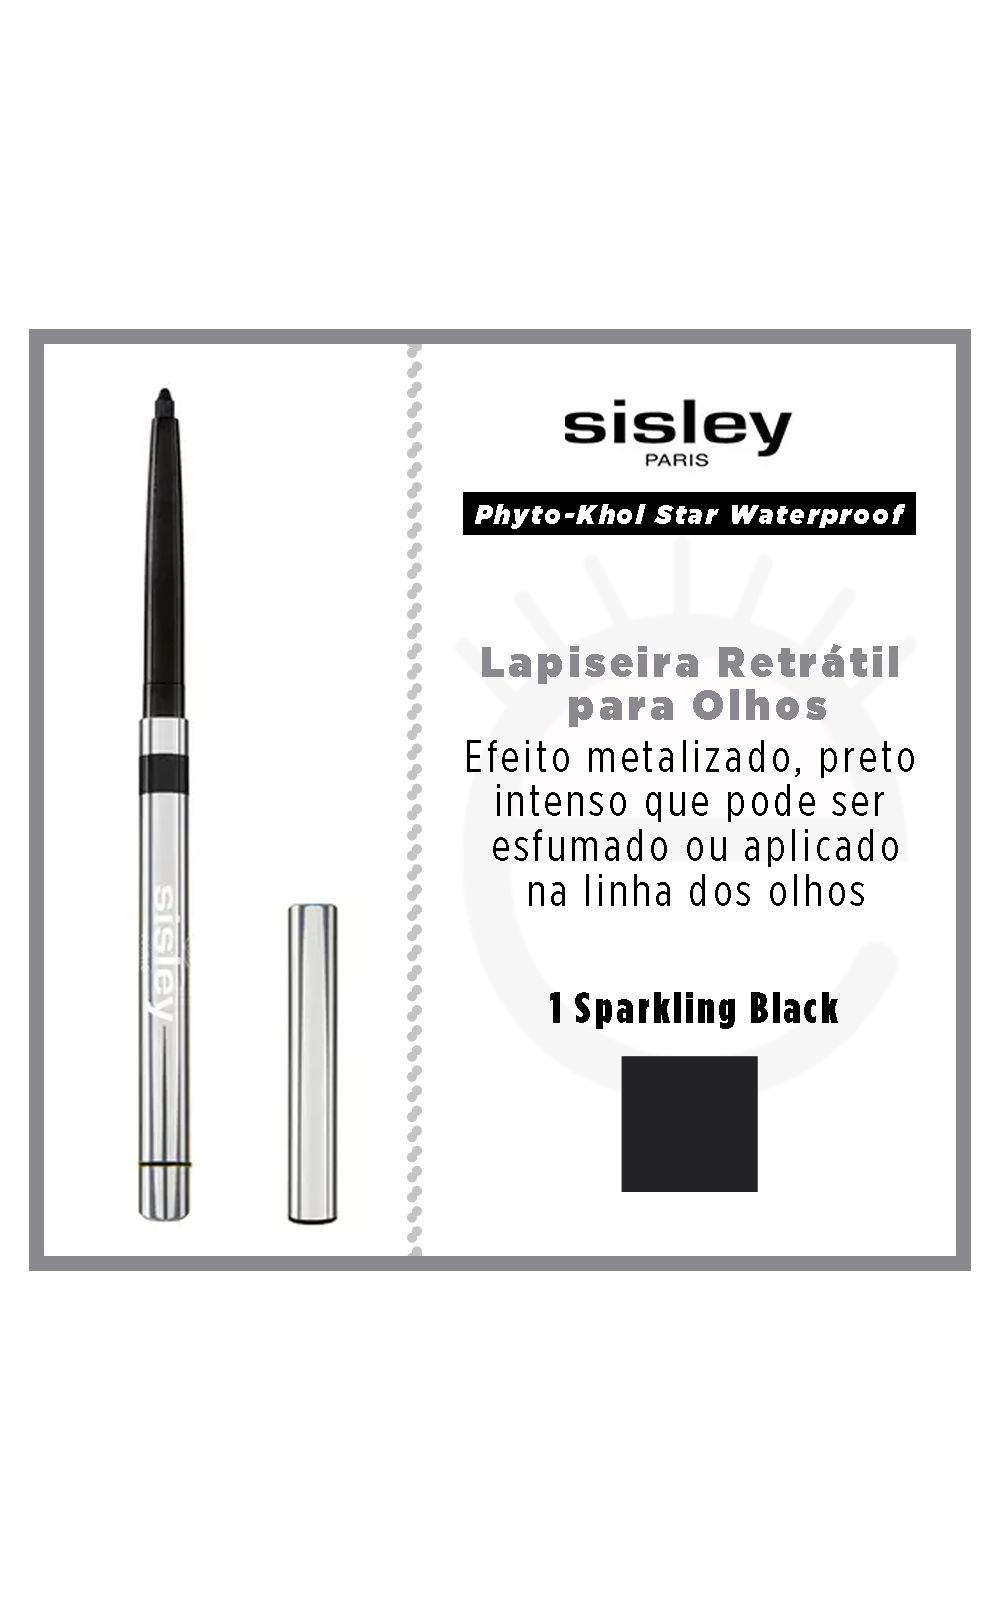 Foto 4 - Lapiseira Retrátil para Olhos Phyto-Khol Star Waterproof Sisley - 1 Sparkling Black